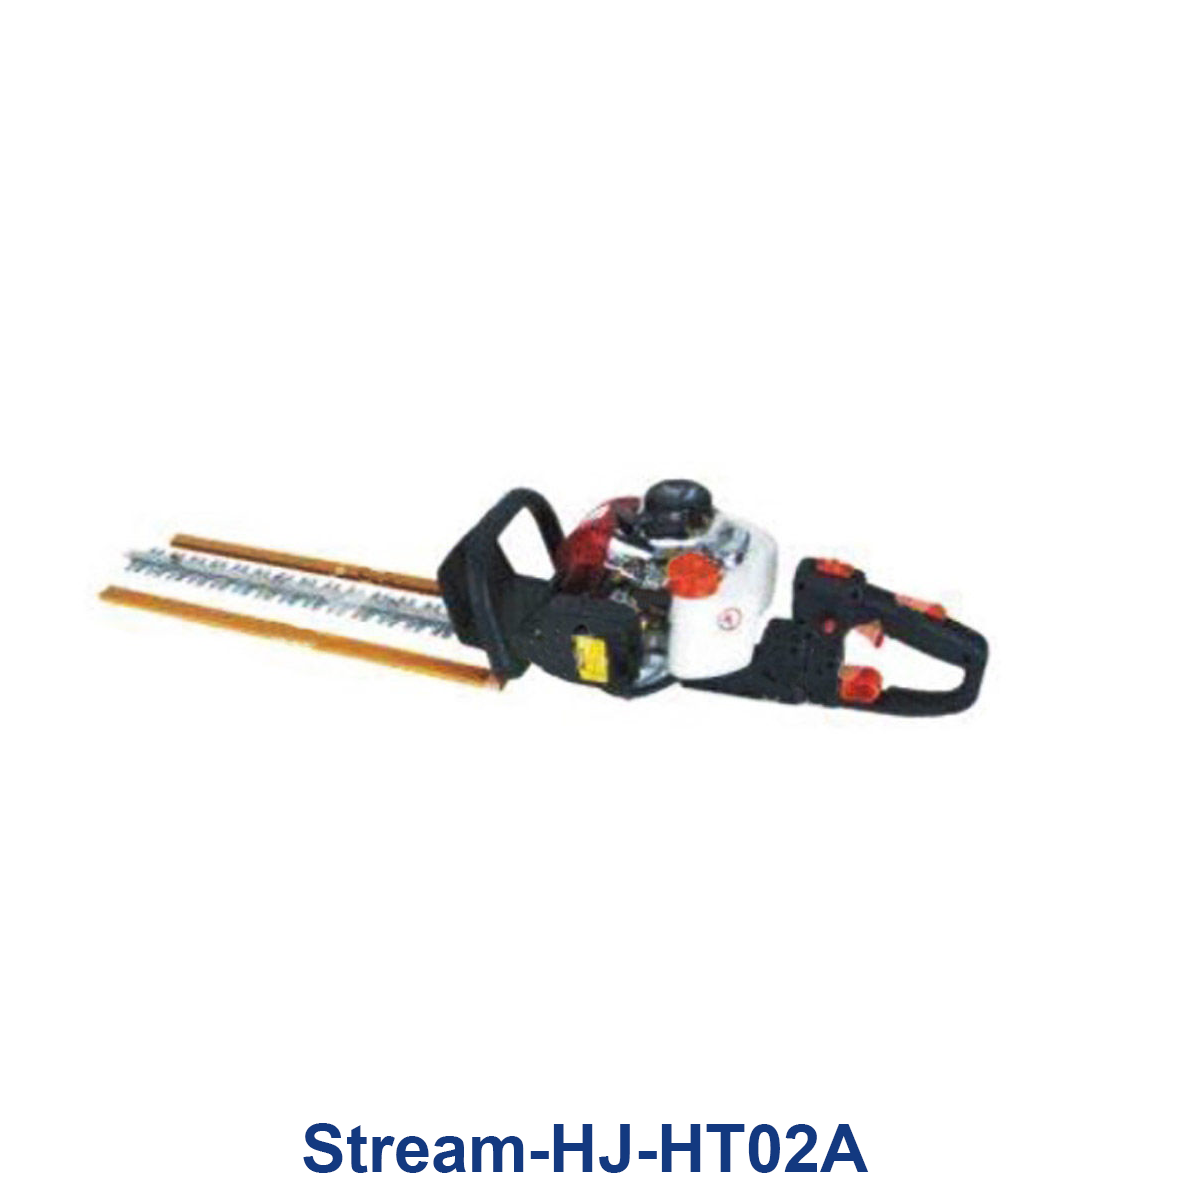 Stream-HJ-HT02A